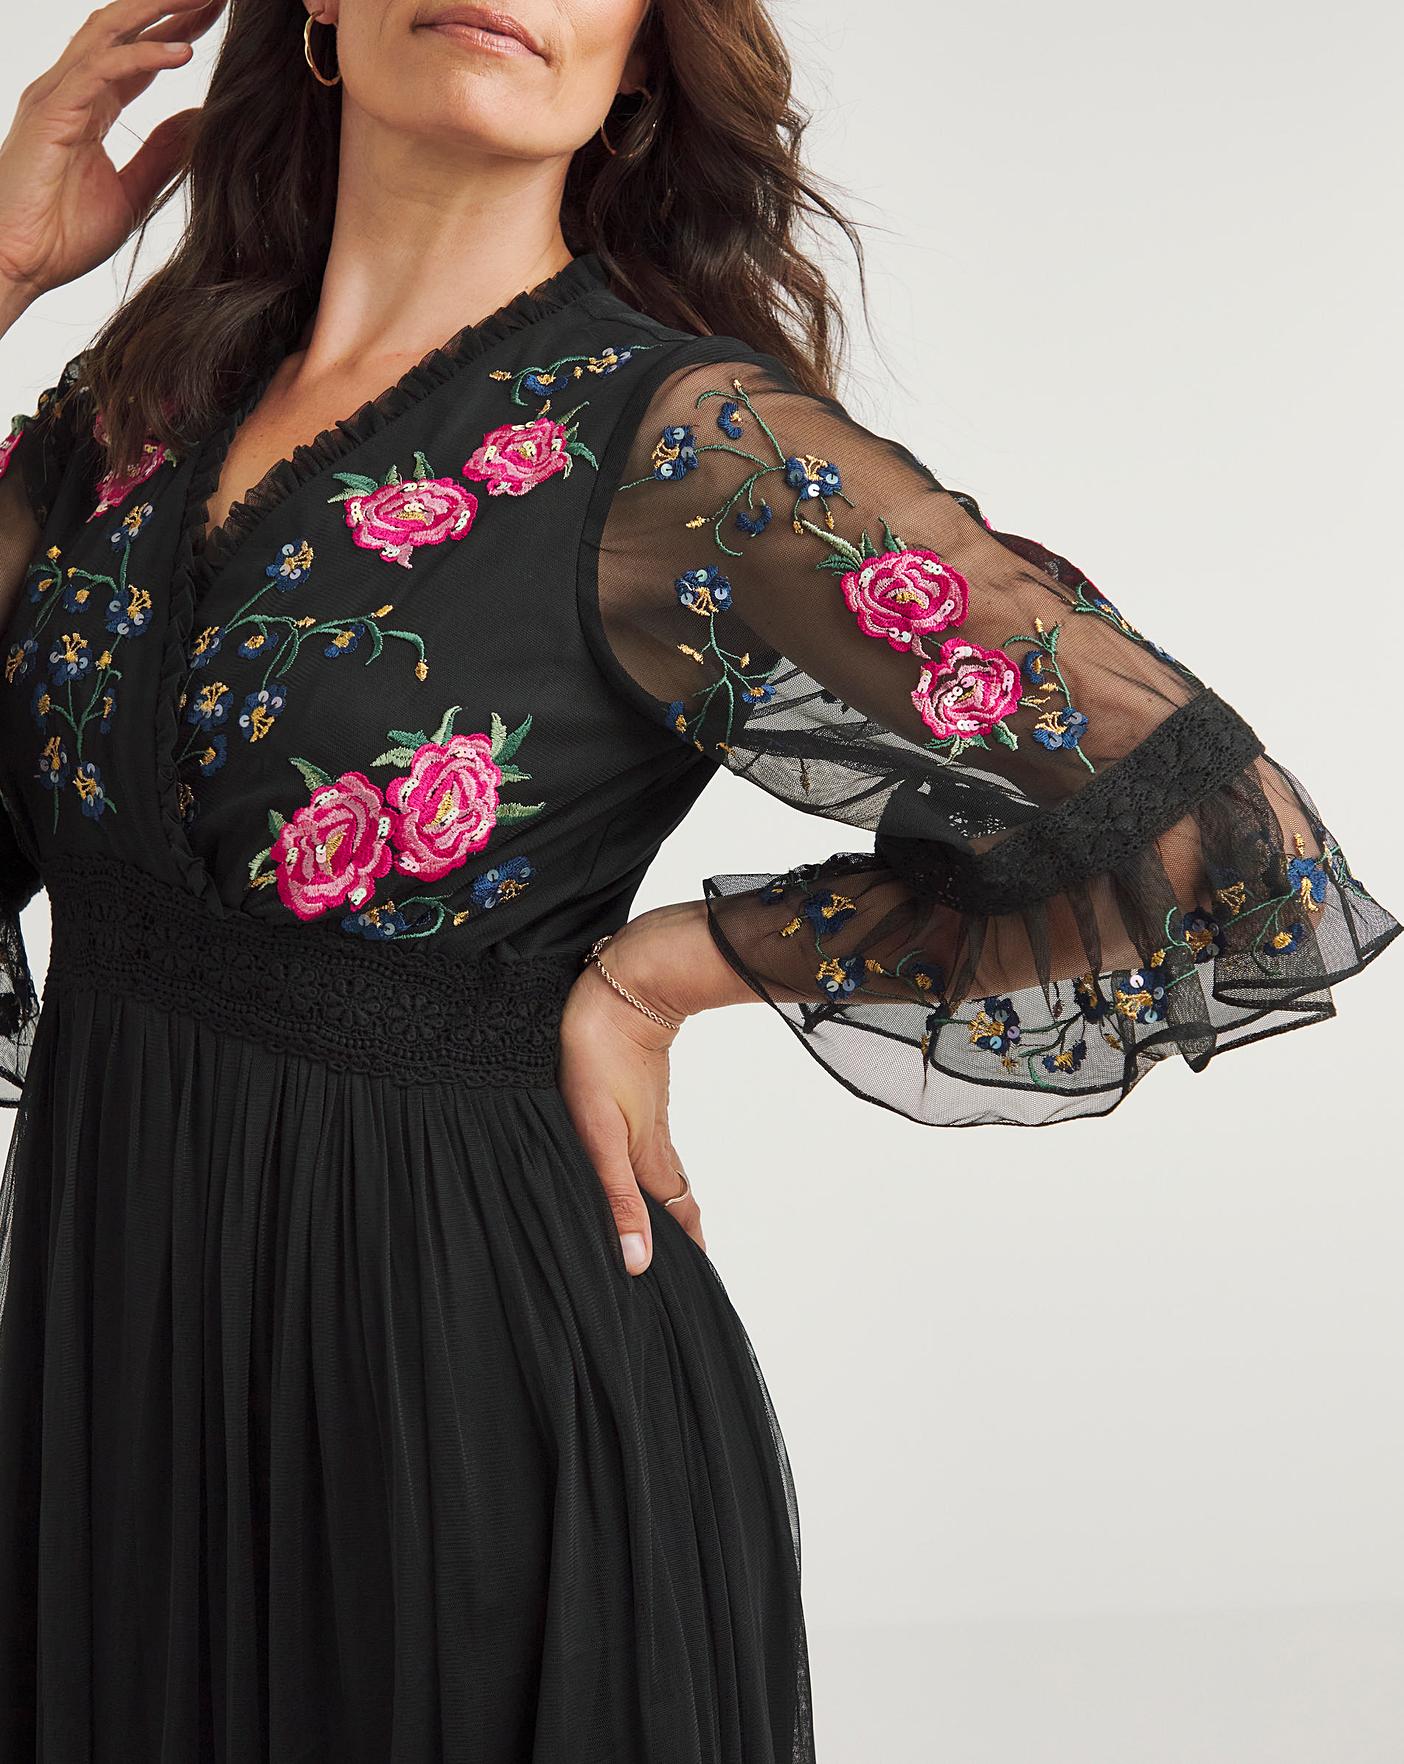 Joanna Hope Embroidered Maxi Dress | Marisota